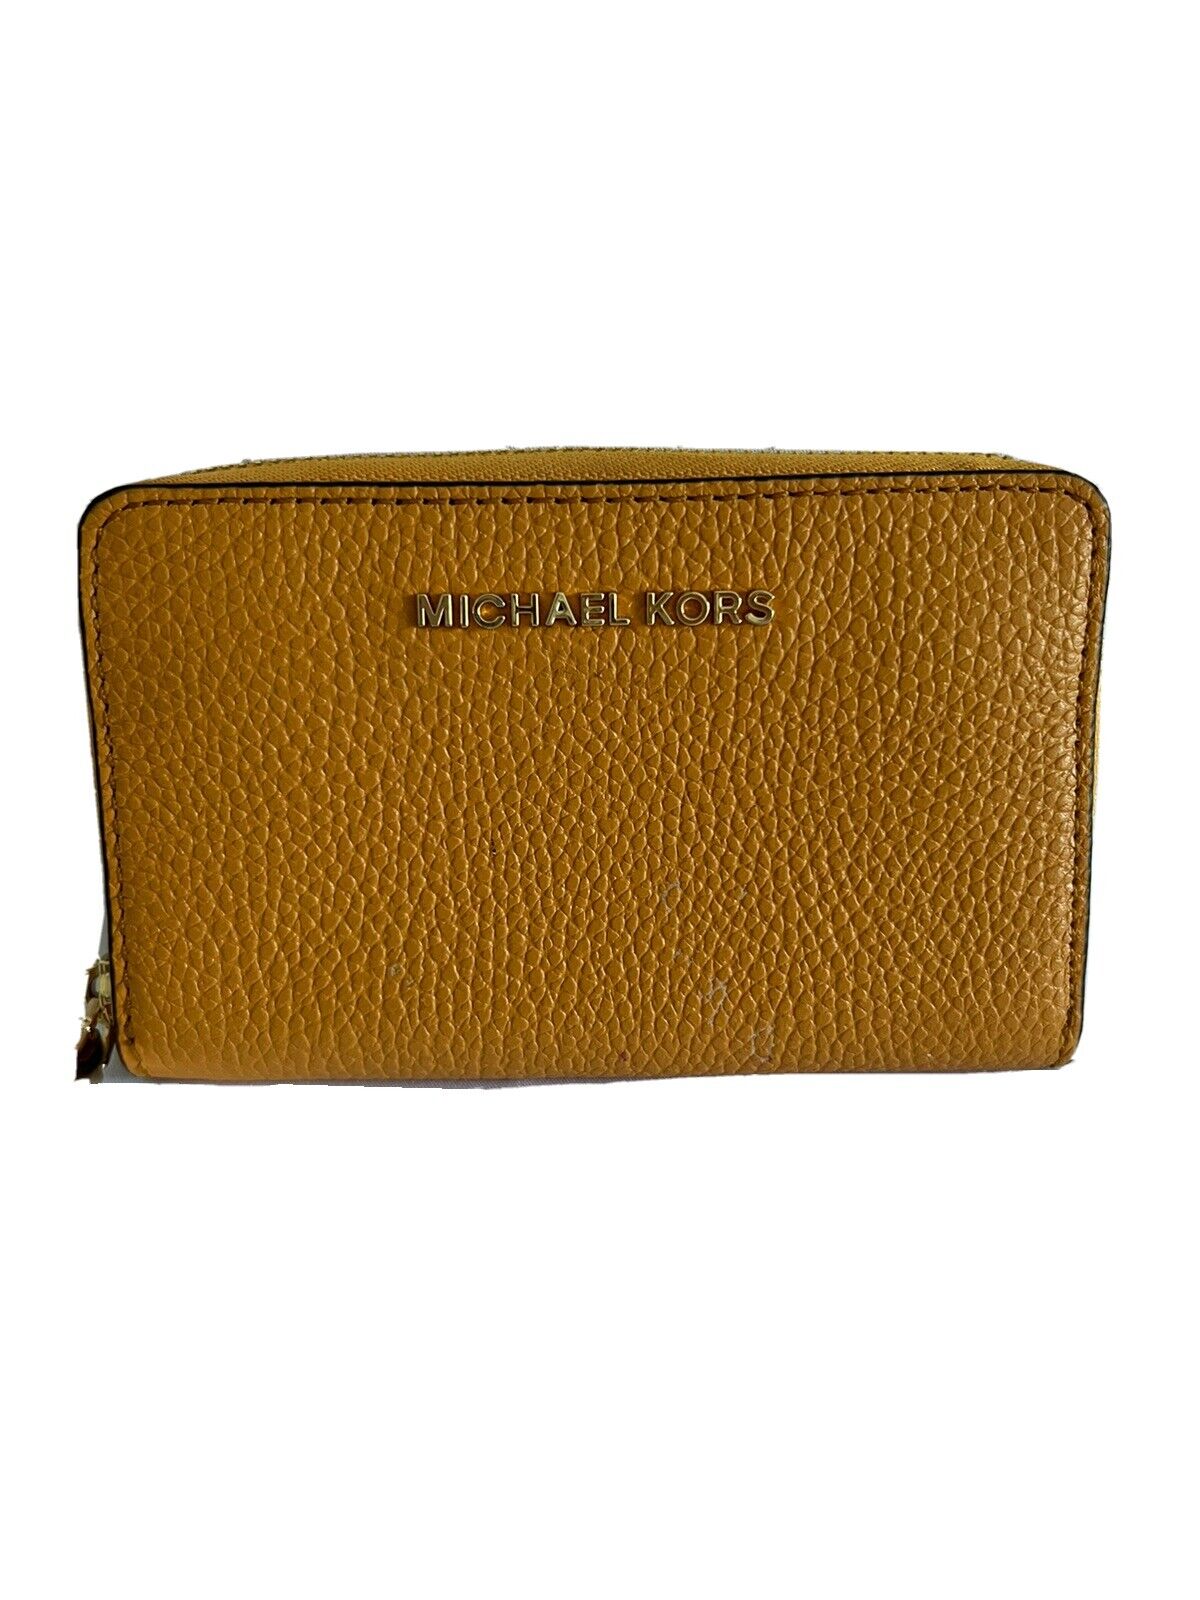 Michael Kors yellow wallet